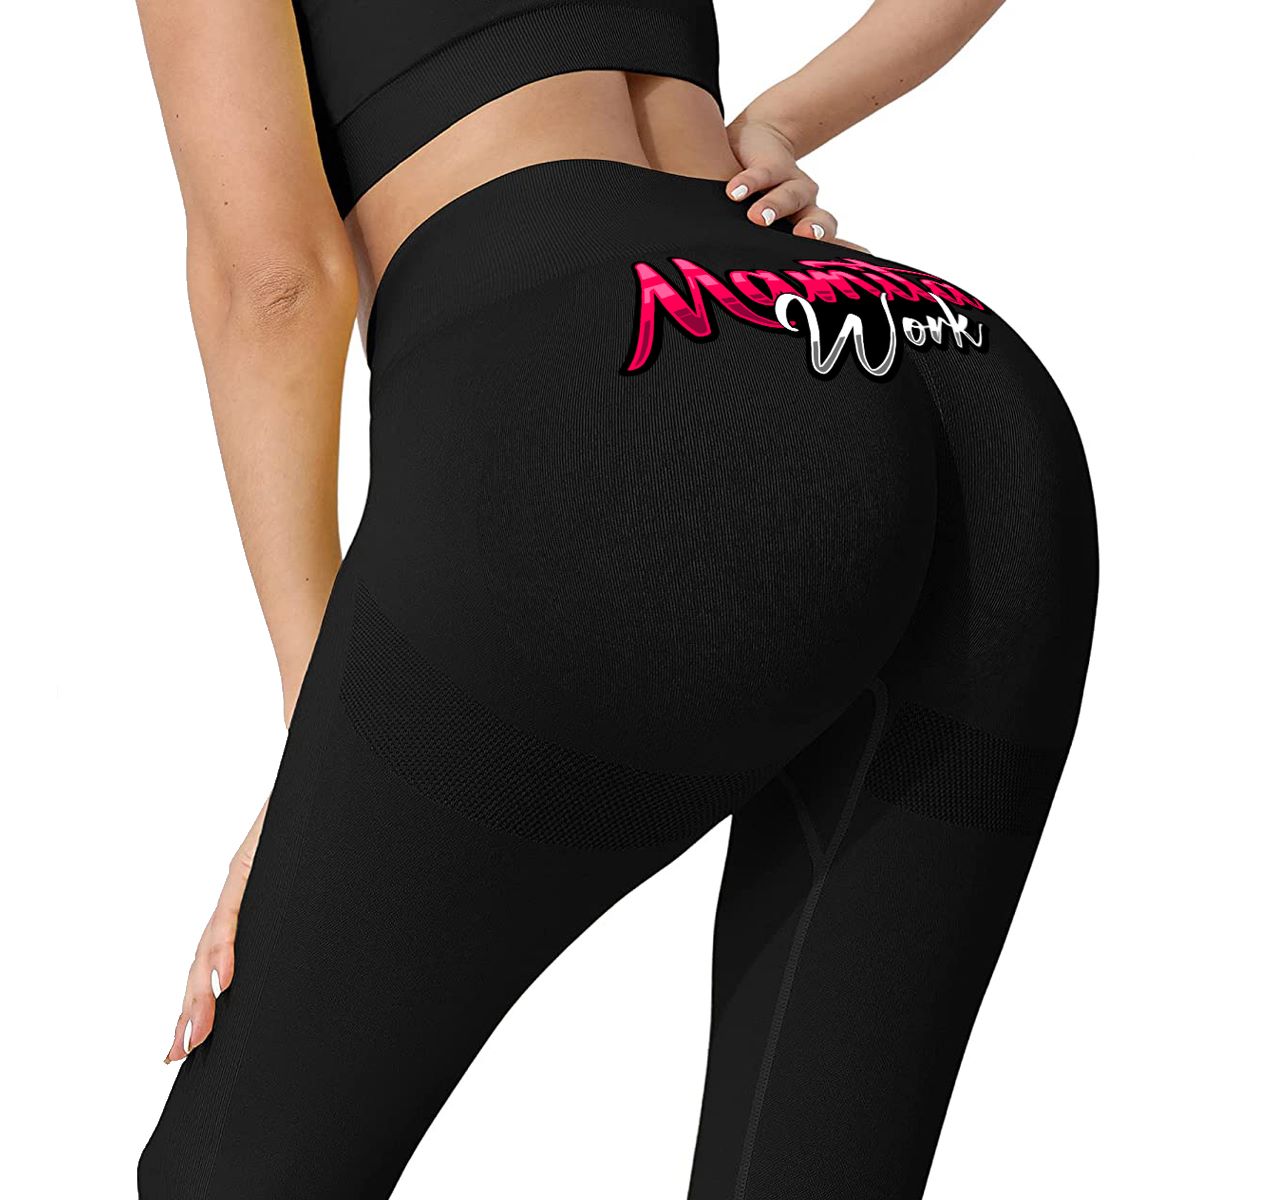 Women crunch leggings back logo – Mamita works